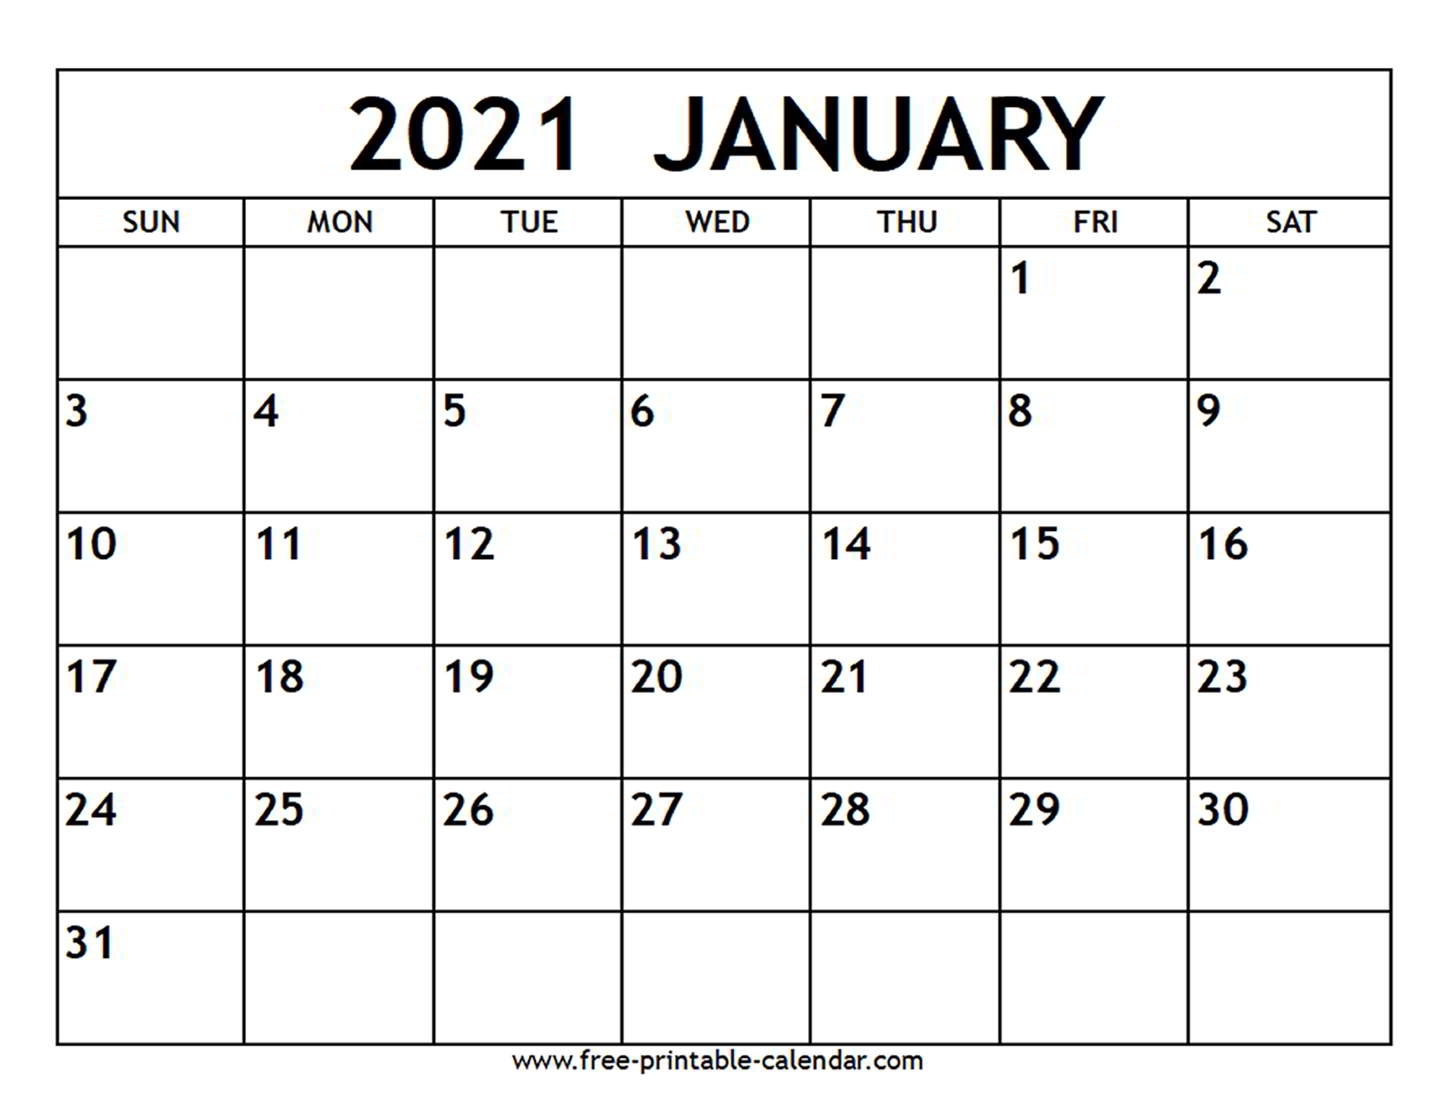 Take Print Free 2021 Calendar Without Downloading